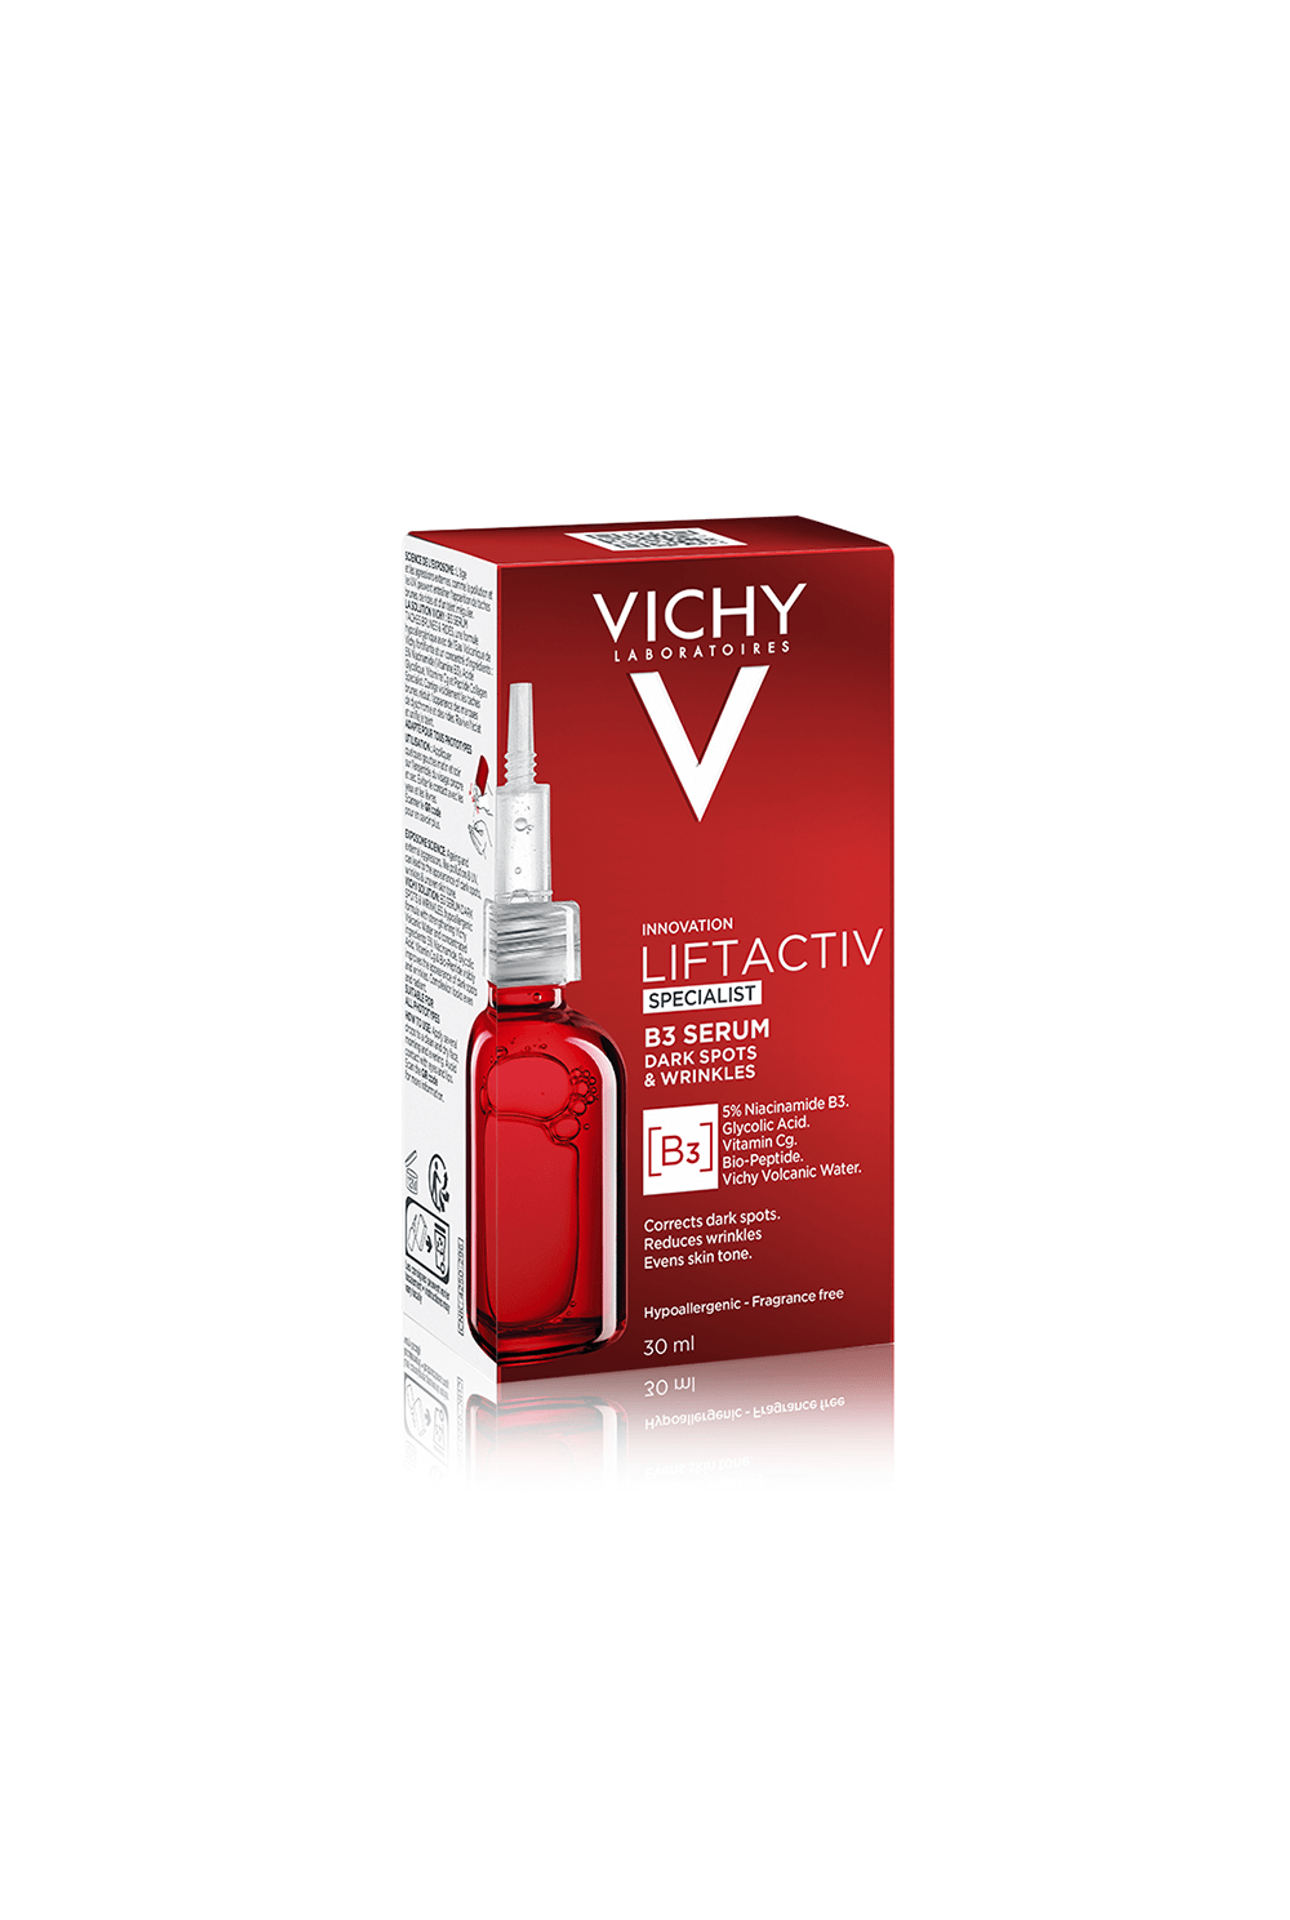 Vichy-LiftActiv-Specialist-B3-Serum-3337875734905_img1